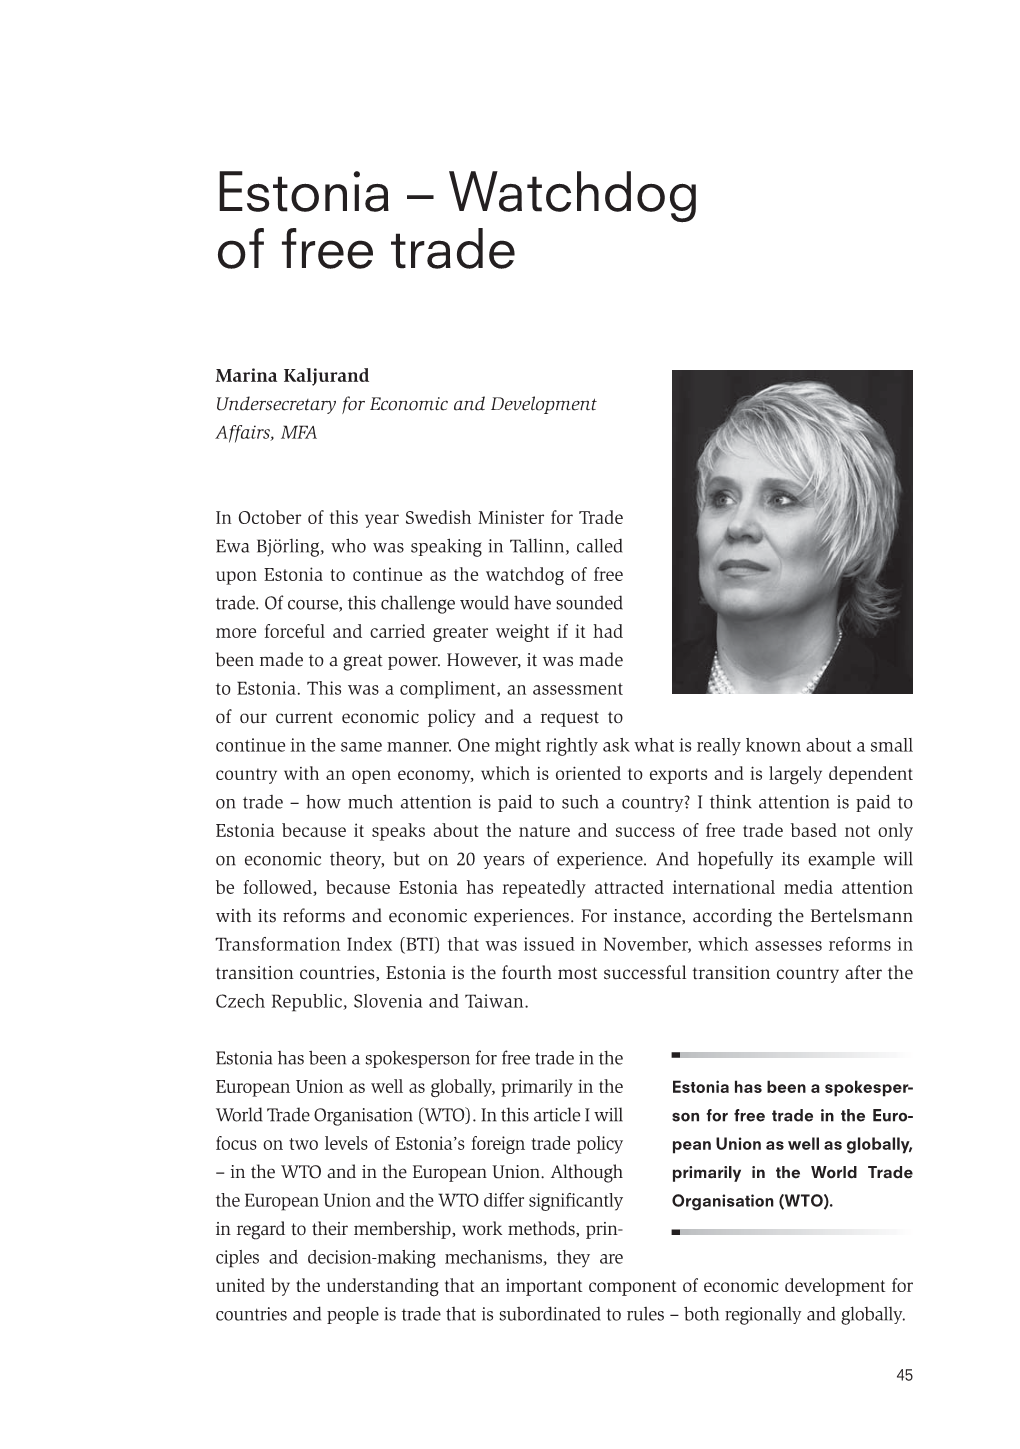 Estonia – Watchdog of Free Trade